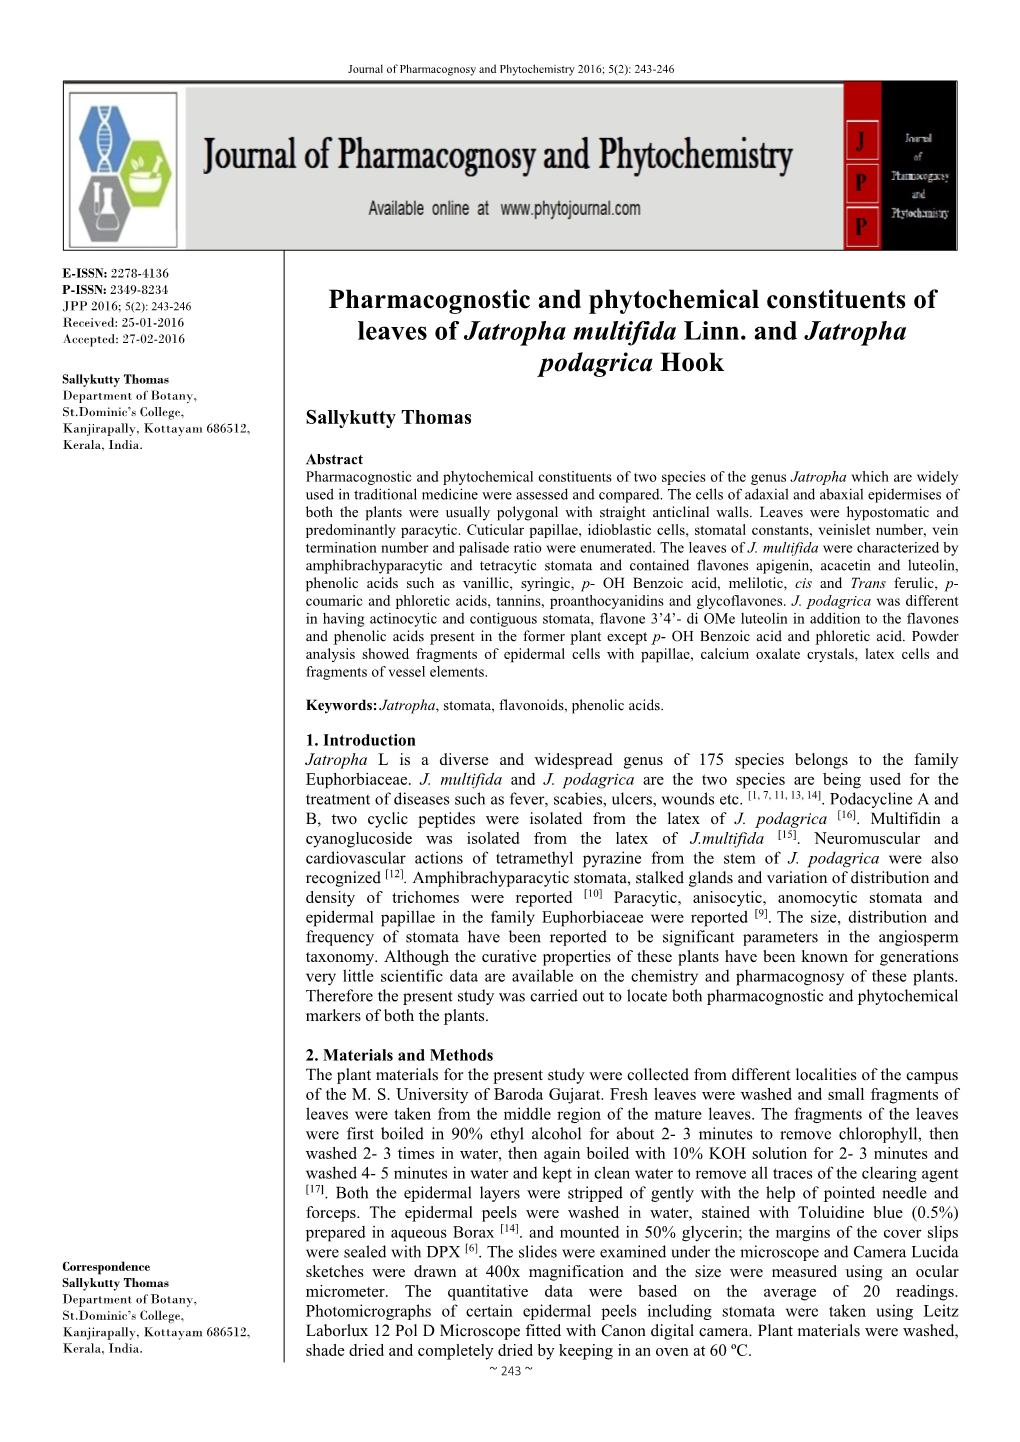 Pharmacognostic and Phytochemical Constituents of Leaves of Jatropha Multifida Linn. and Jatropha Podagrica Hook